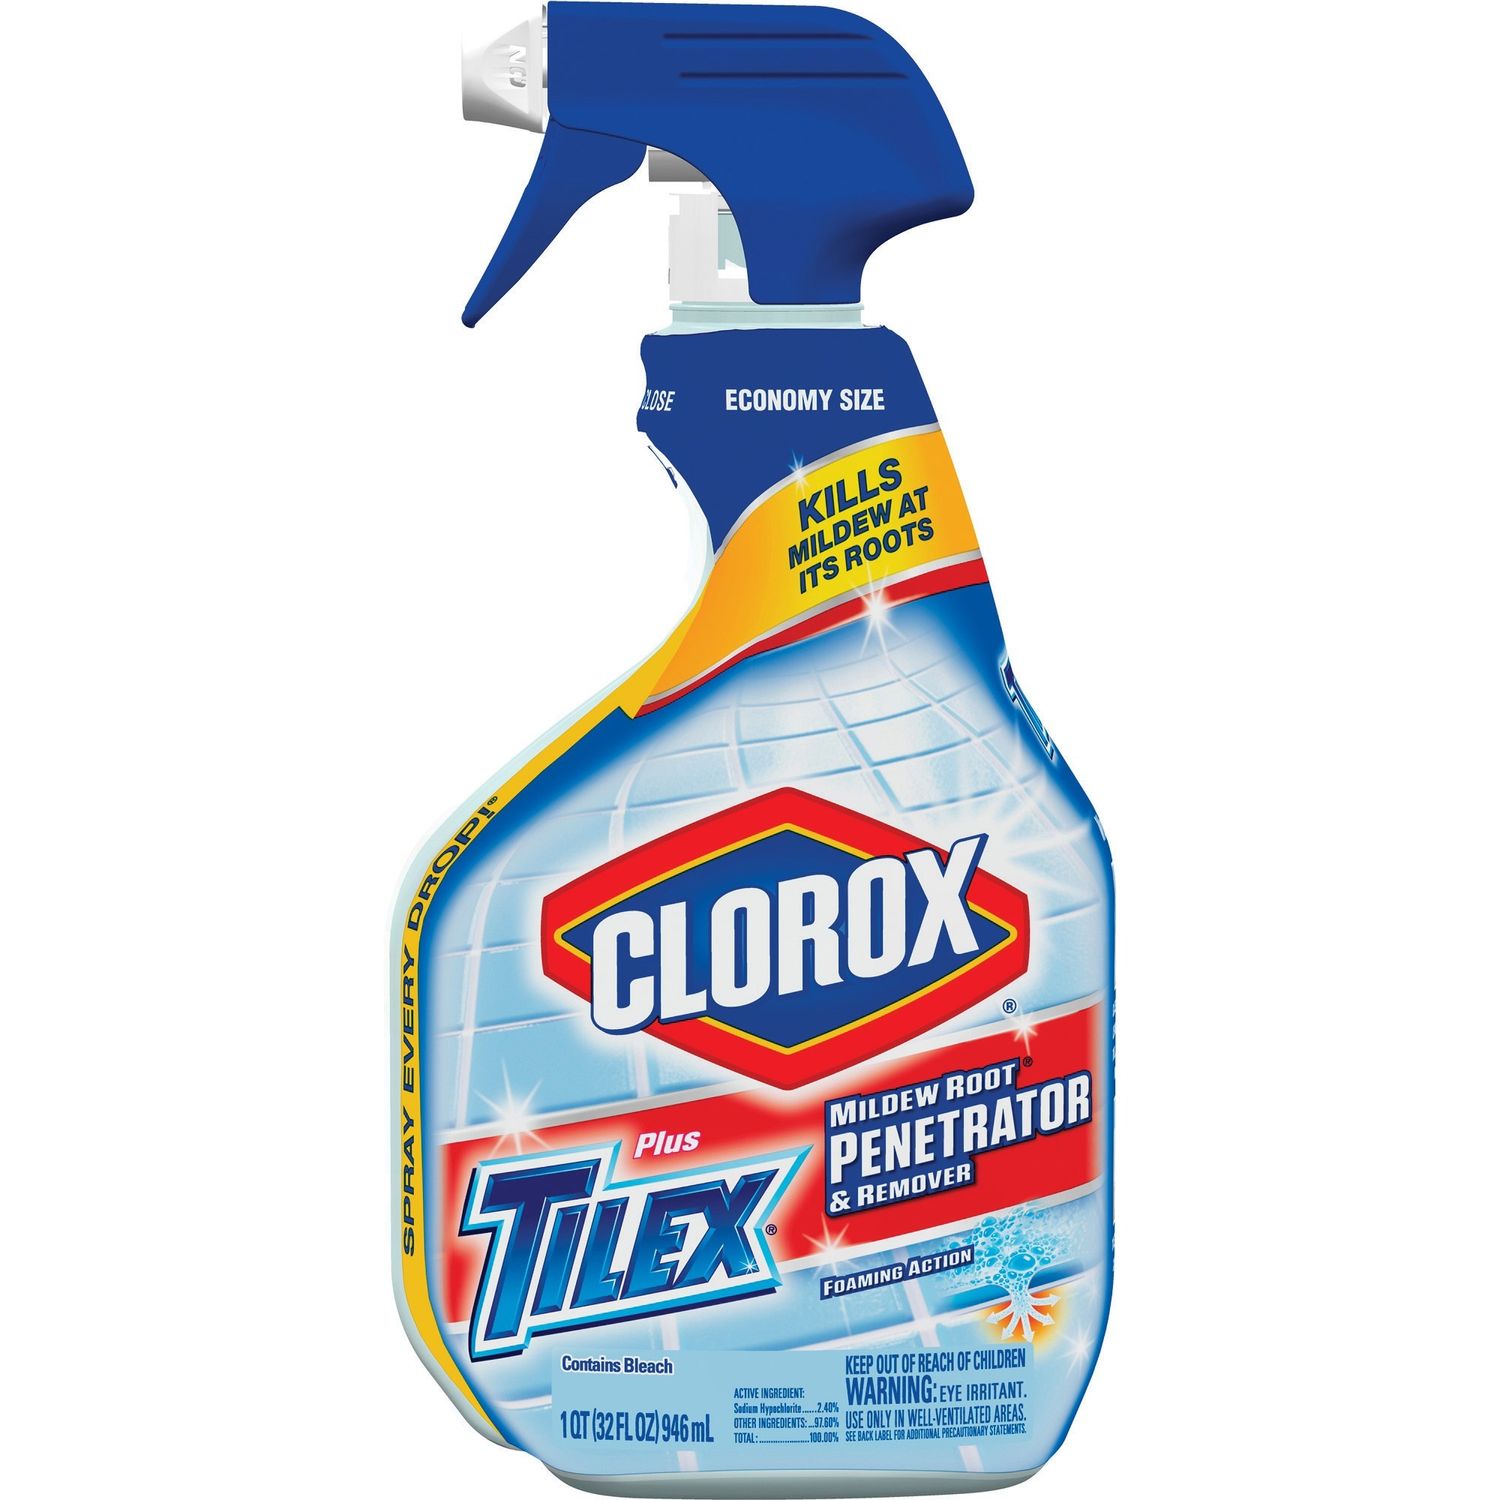 Clorox Plus Tilex Mildew Root Penetrator and Remover with Bleach Spray, 32 fl oz (1 quart), 9 / Carton, Translucent